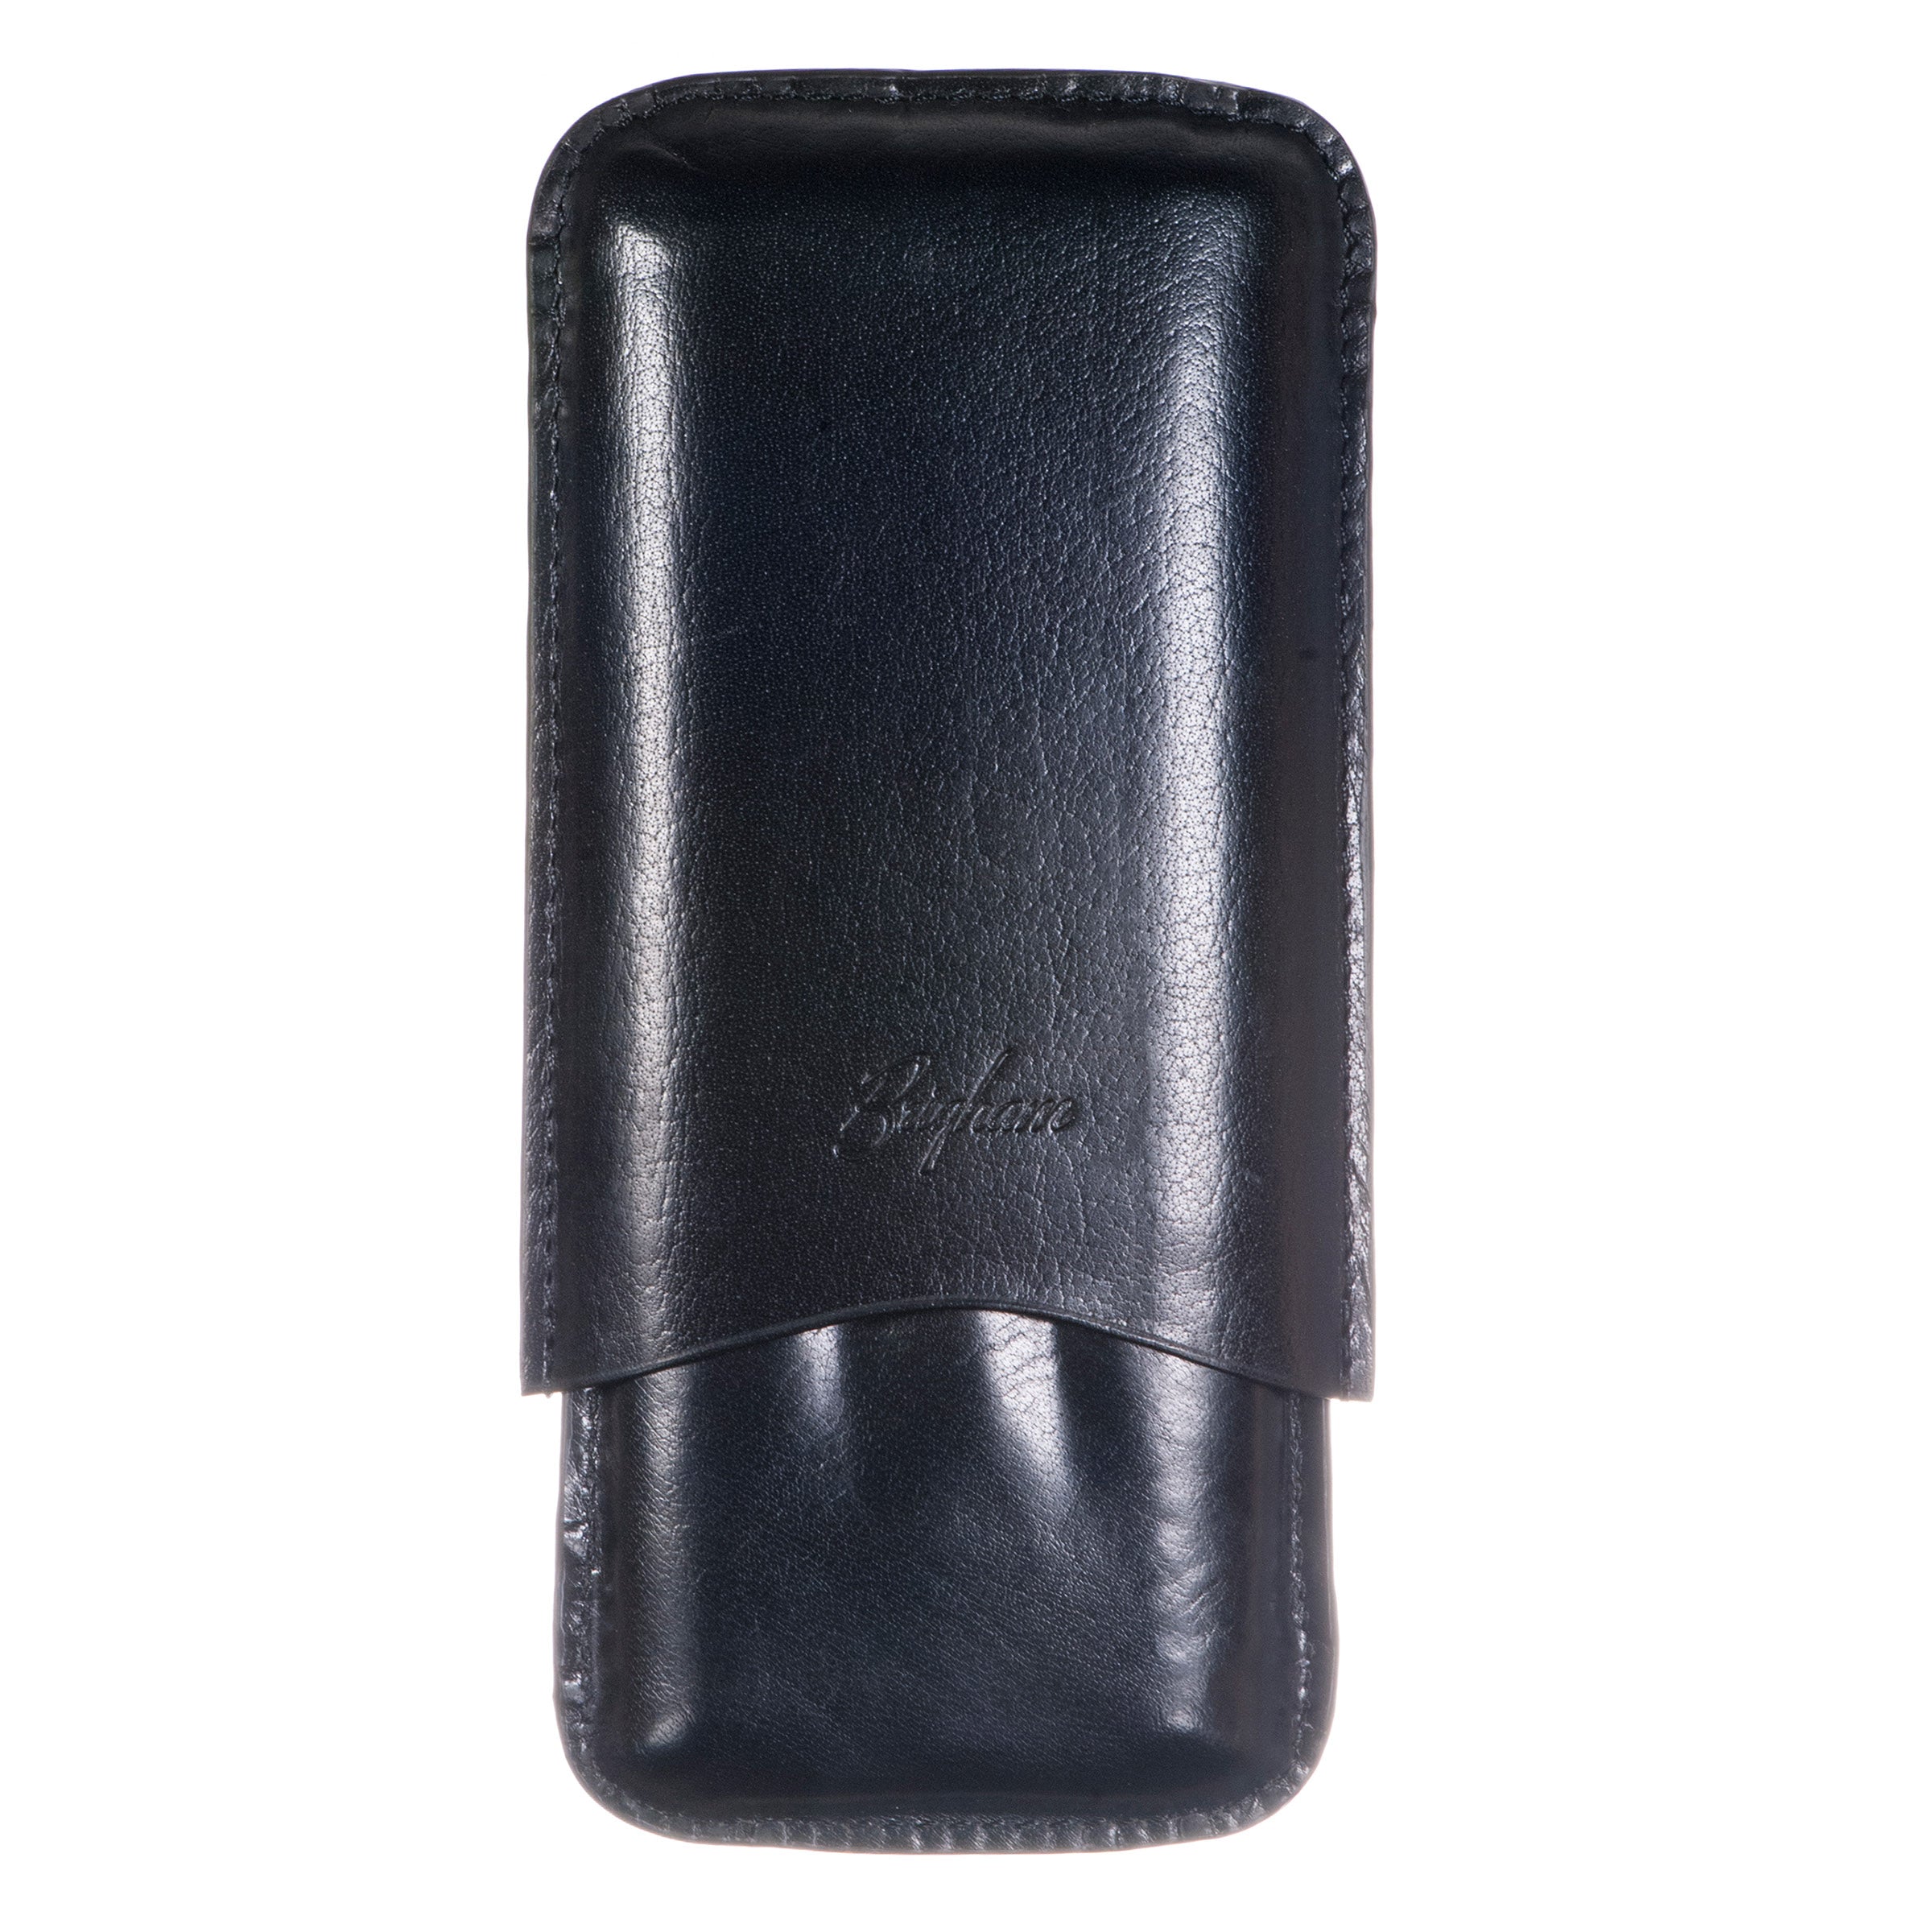 Brigham Black Leather Cigar Cases